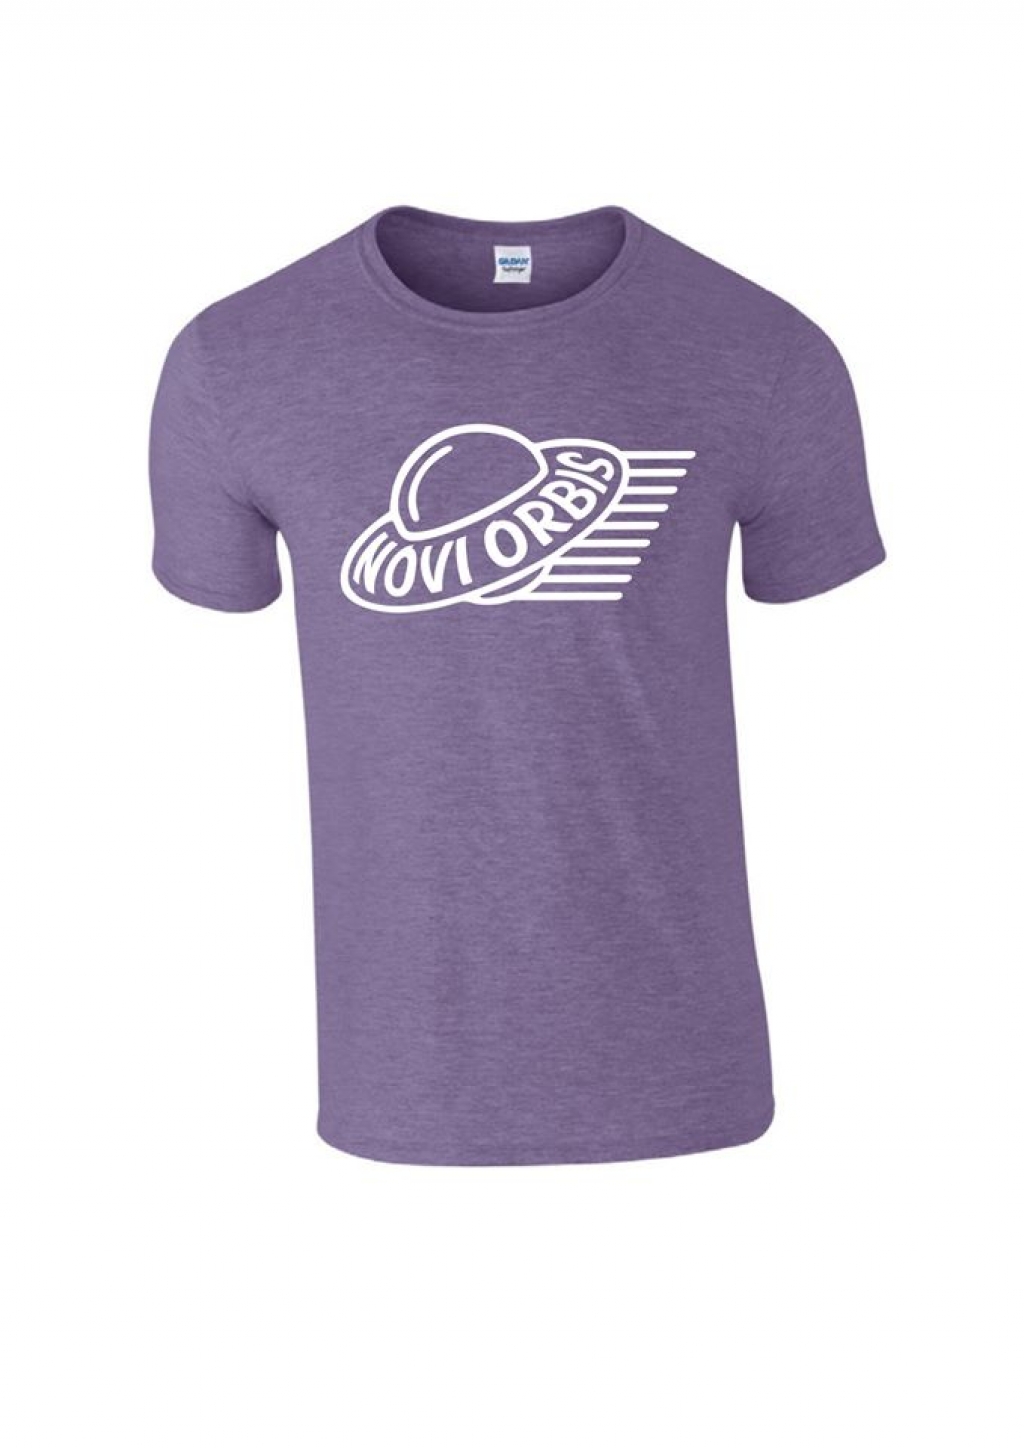 T-Shirt Novi Orbis - Size XXL /  GL64000 purple melange with white stamp